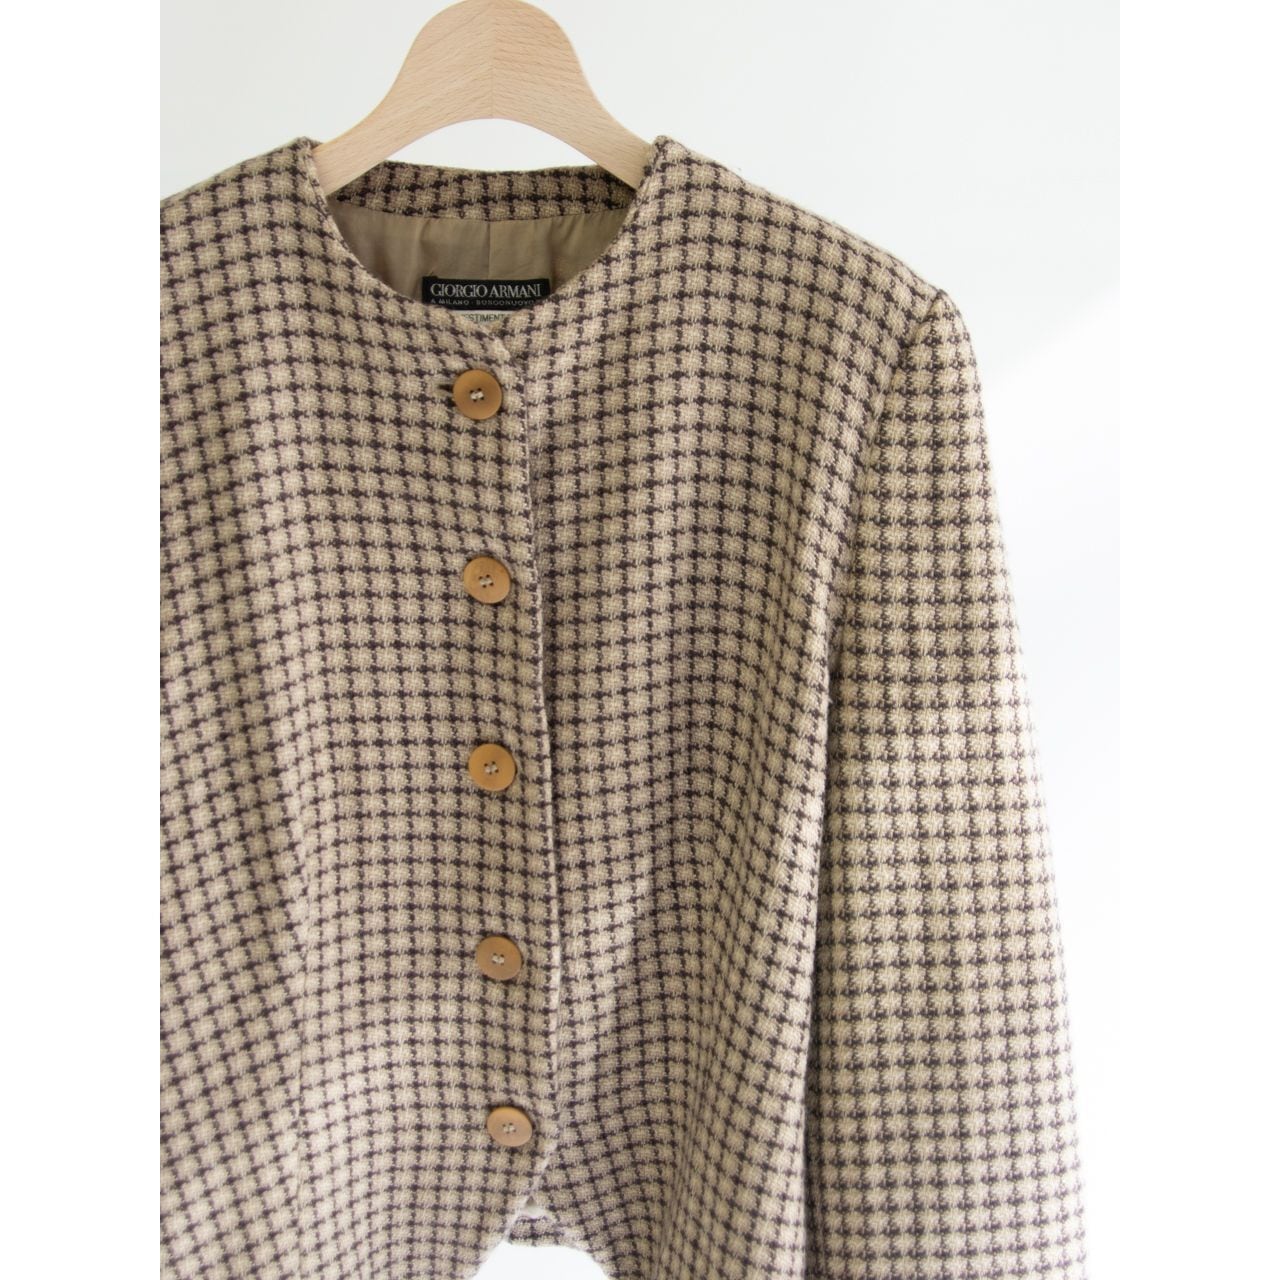 GIORGIO ARMANI】Made in Italy Wool-Silk-Cashmere Collarless Jacket